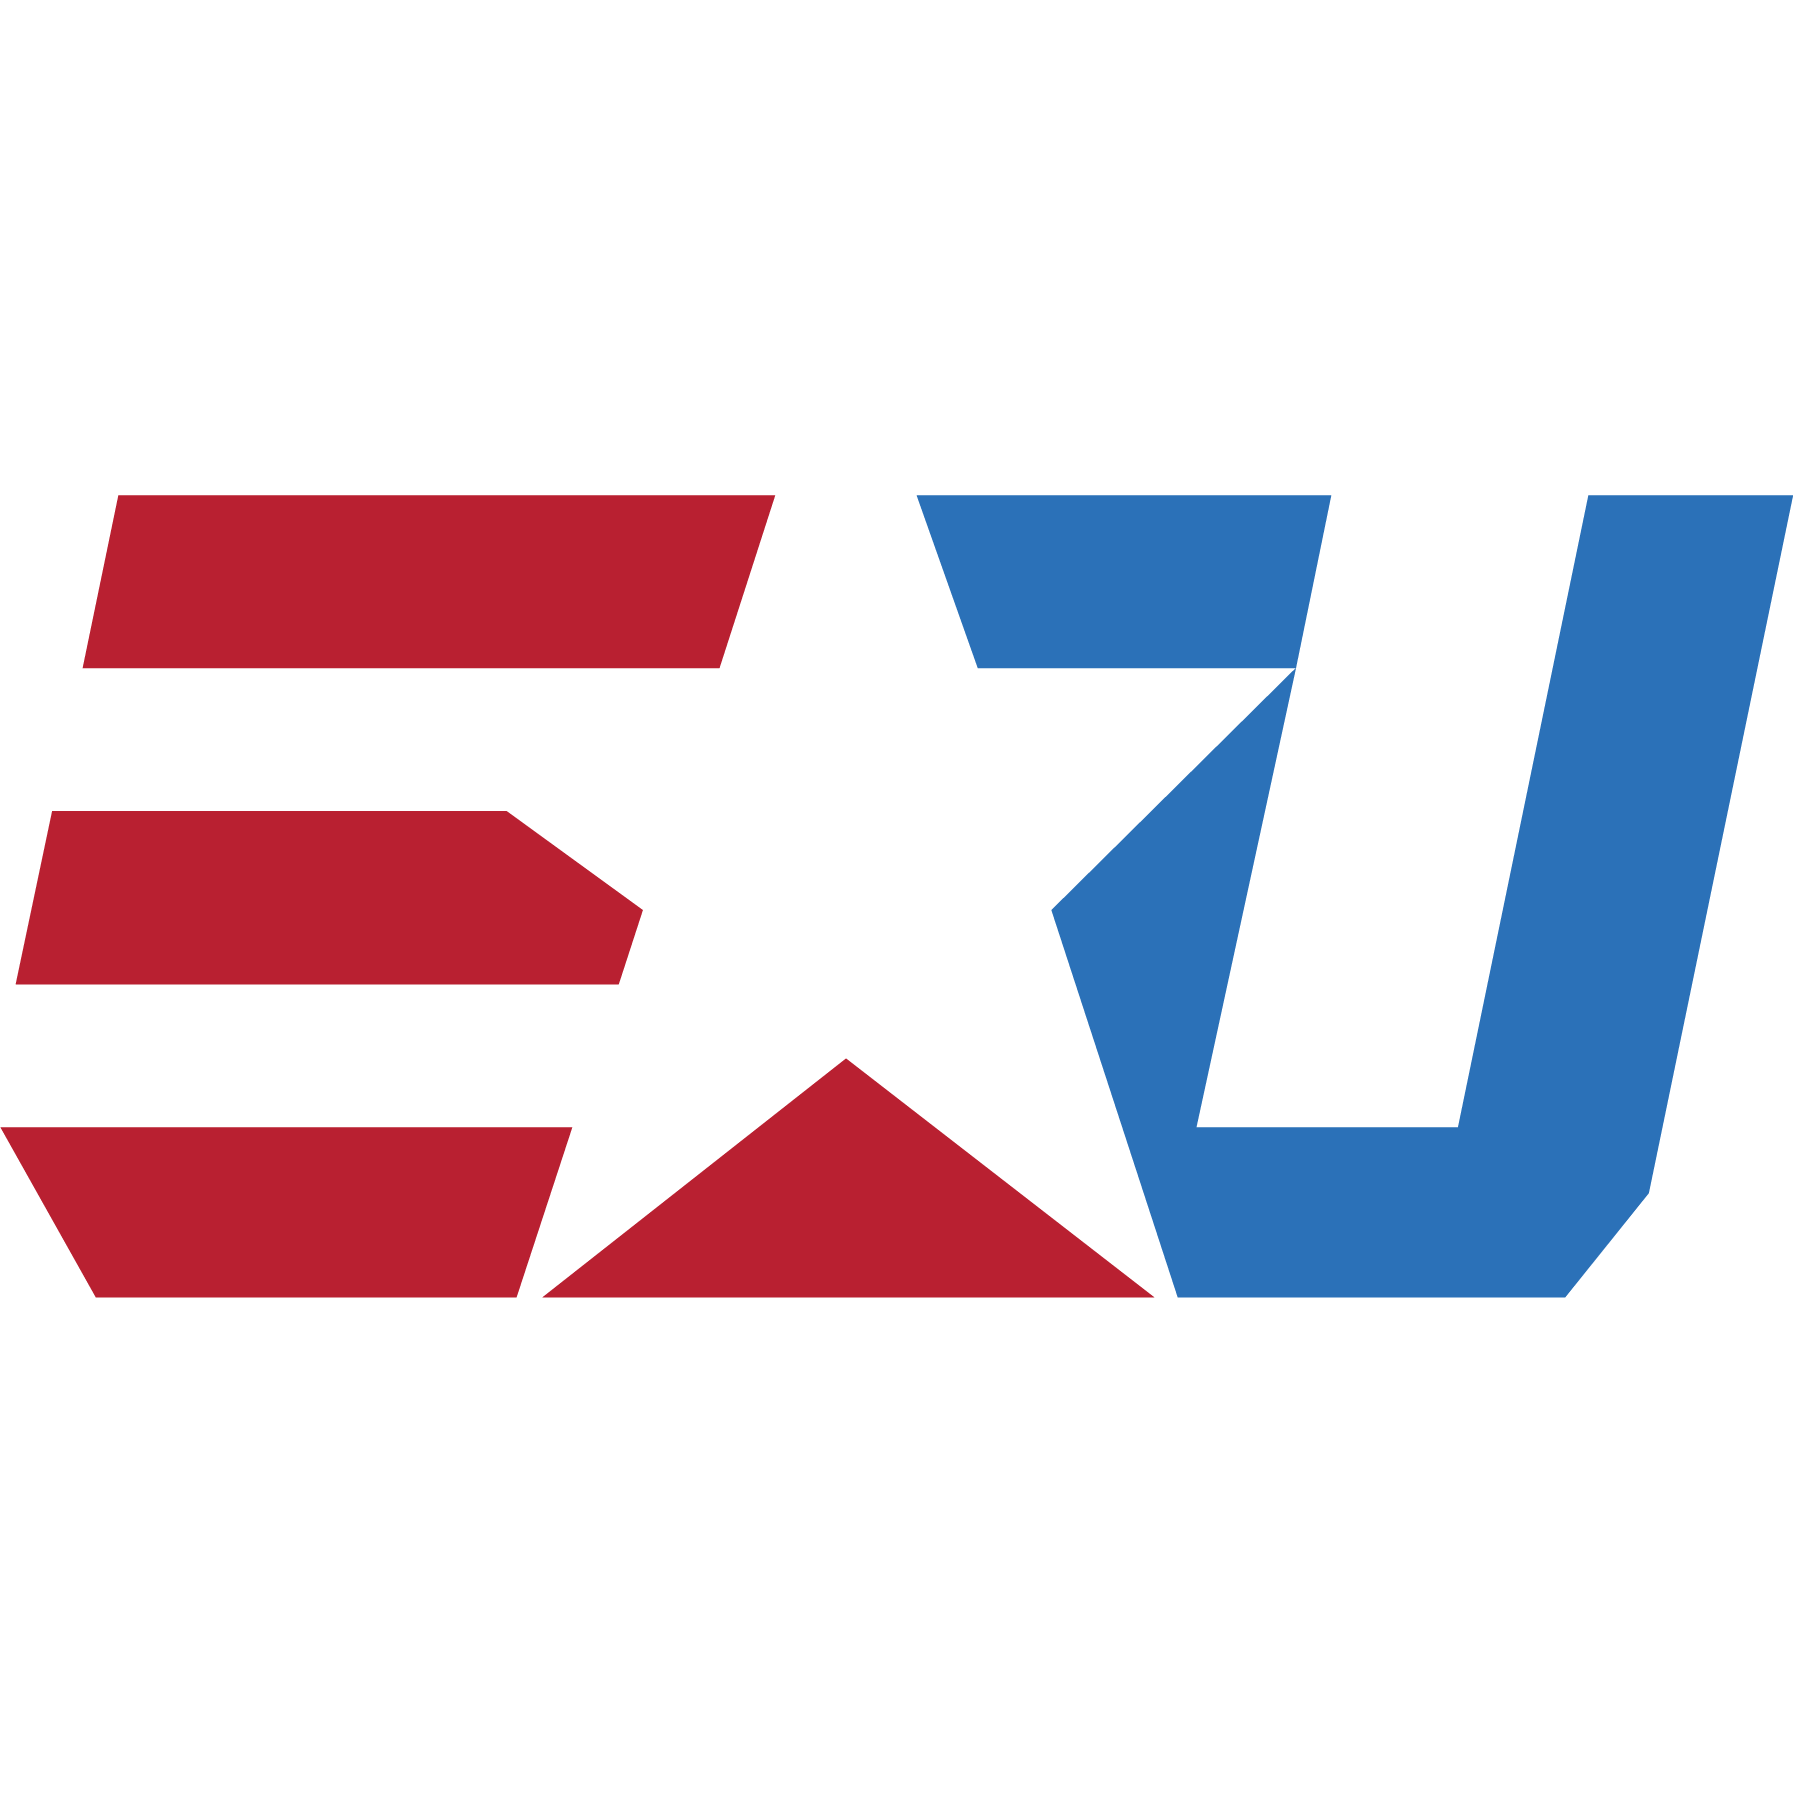 eUnited logo